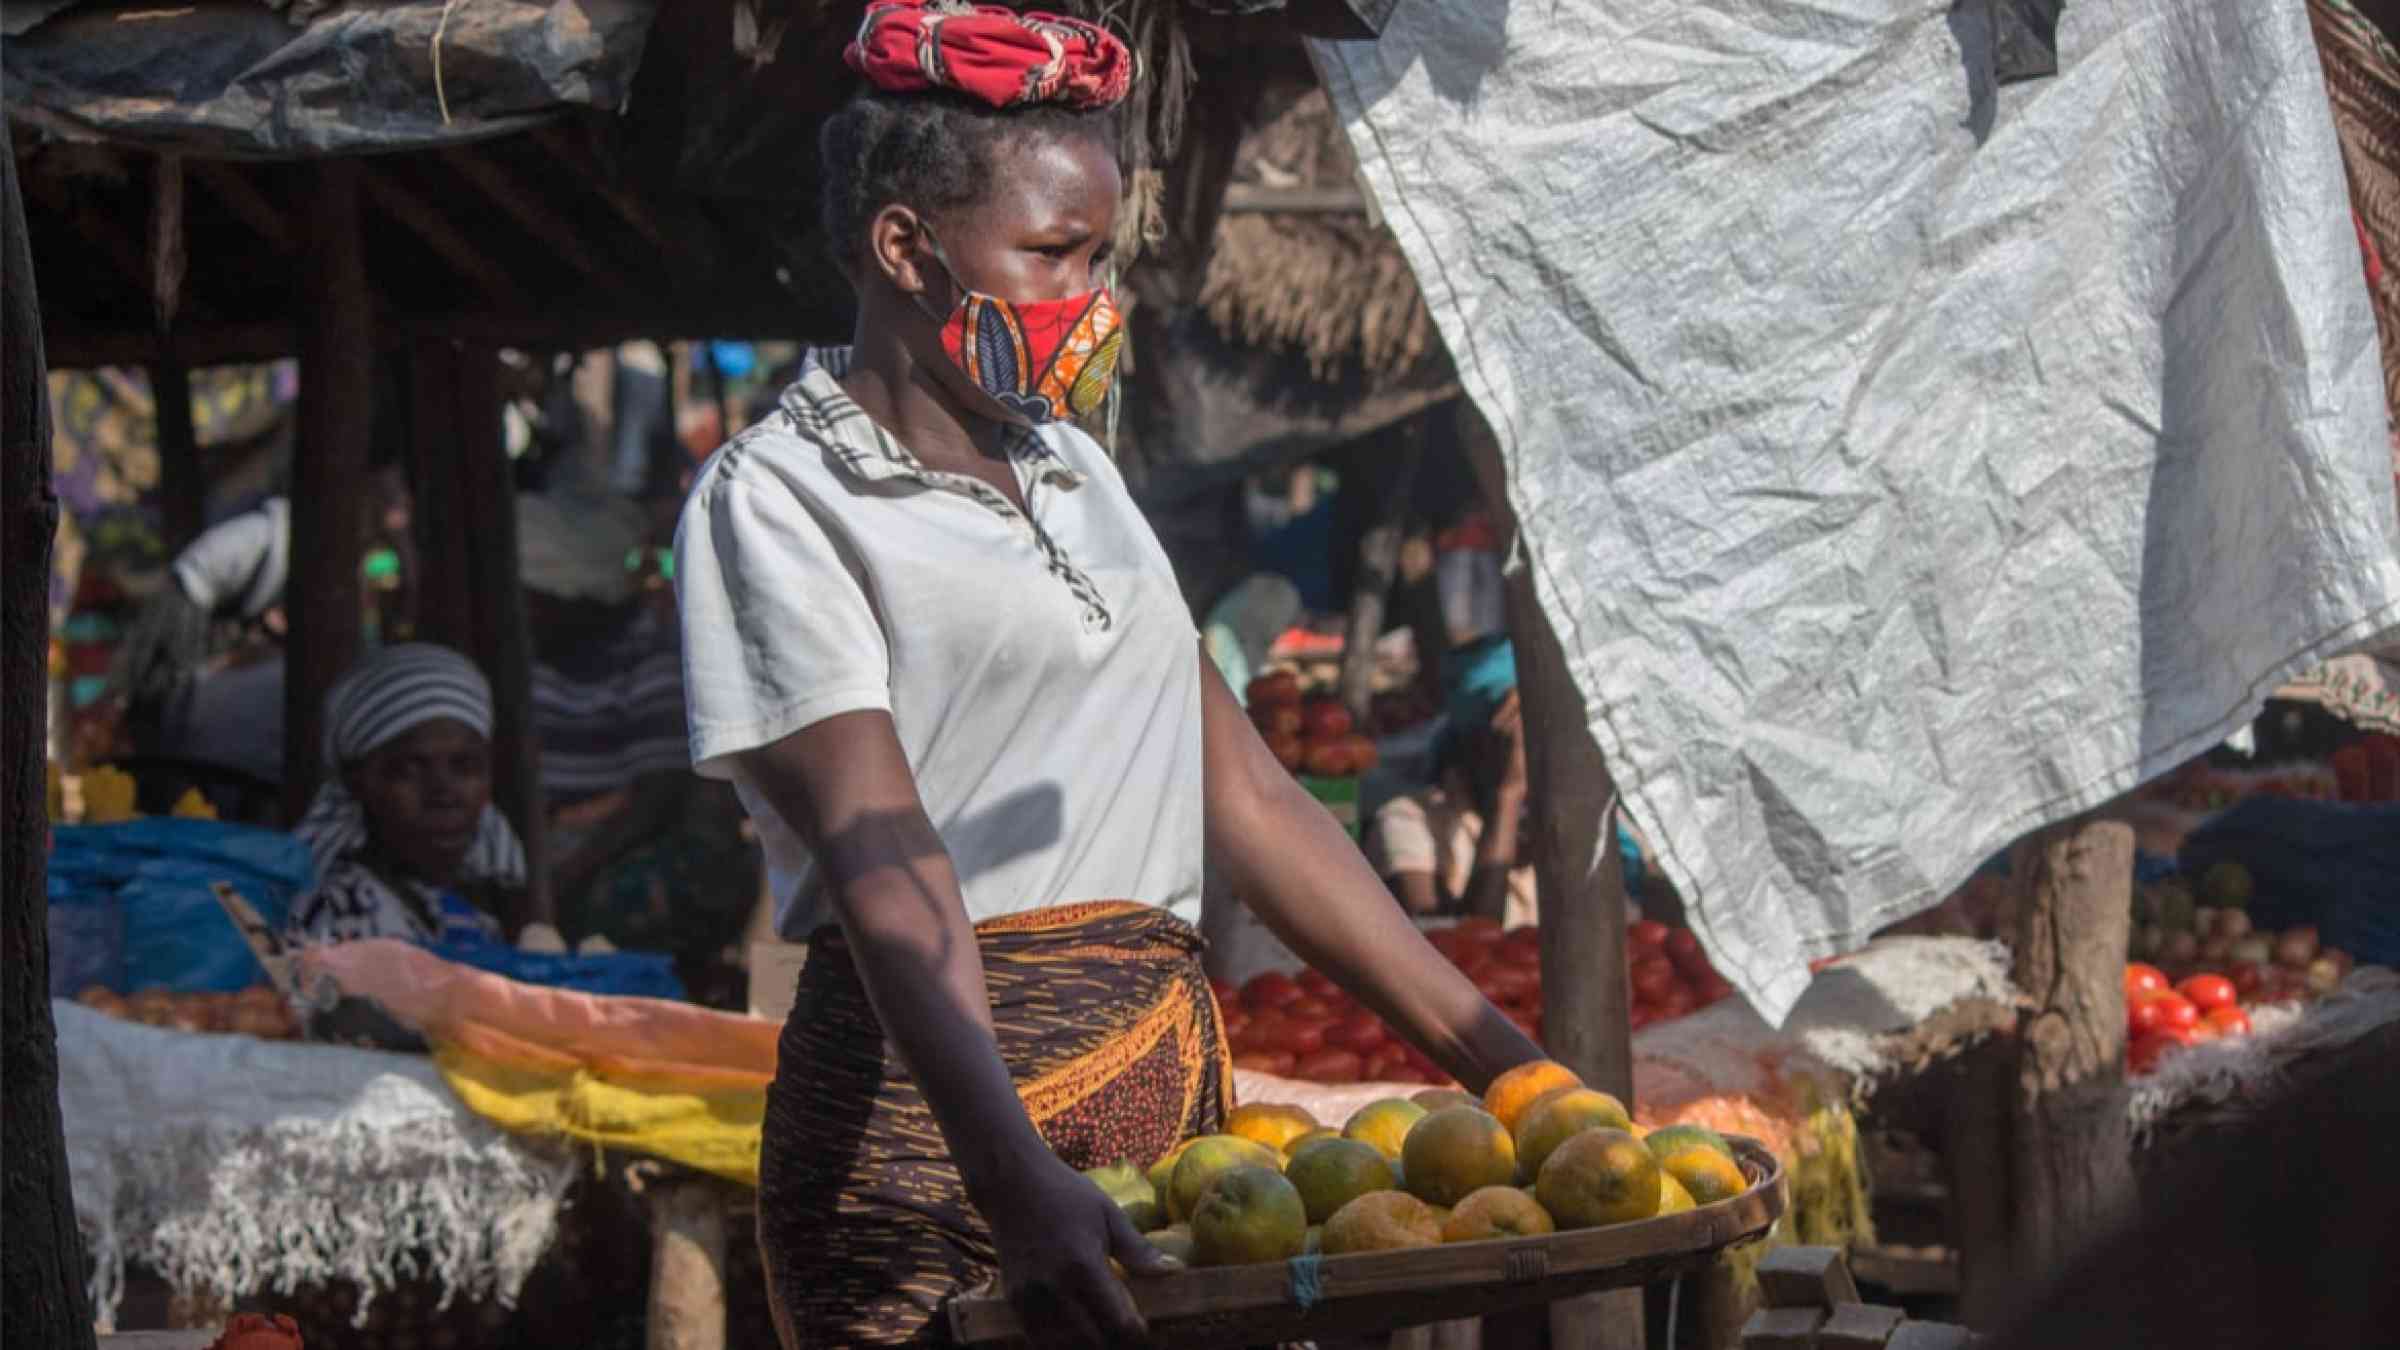 Informal street vendor in an African country